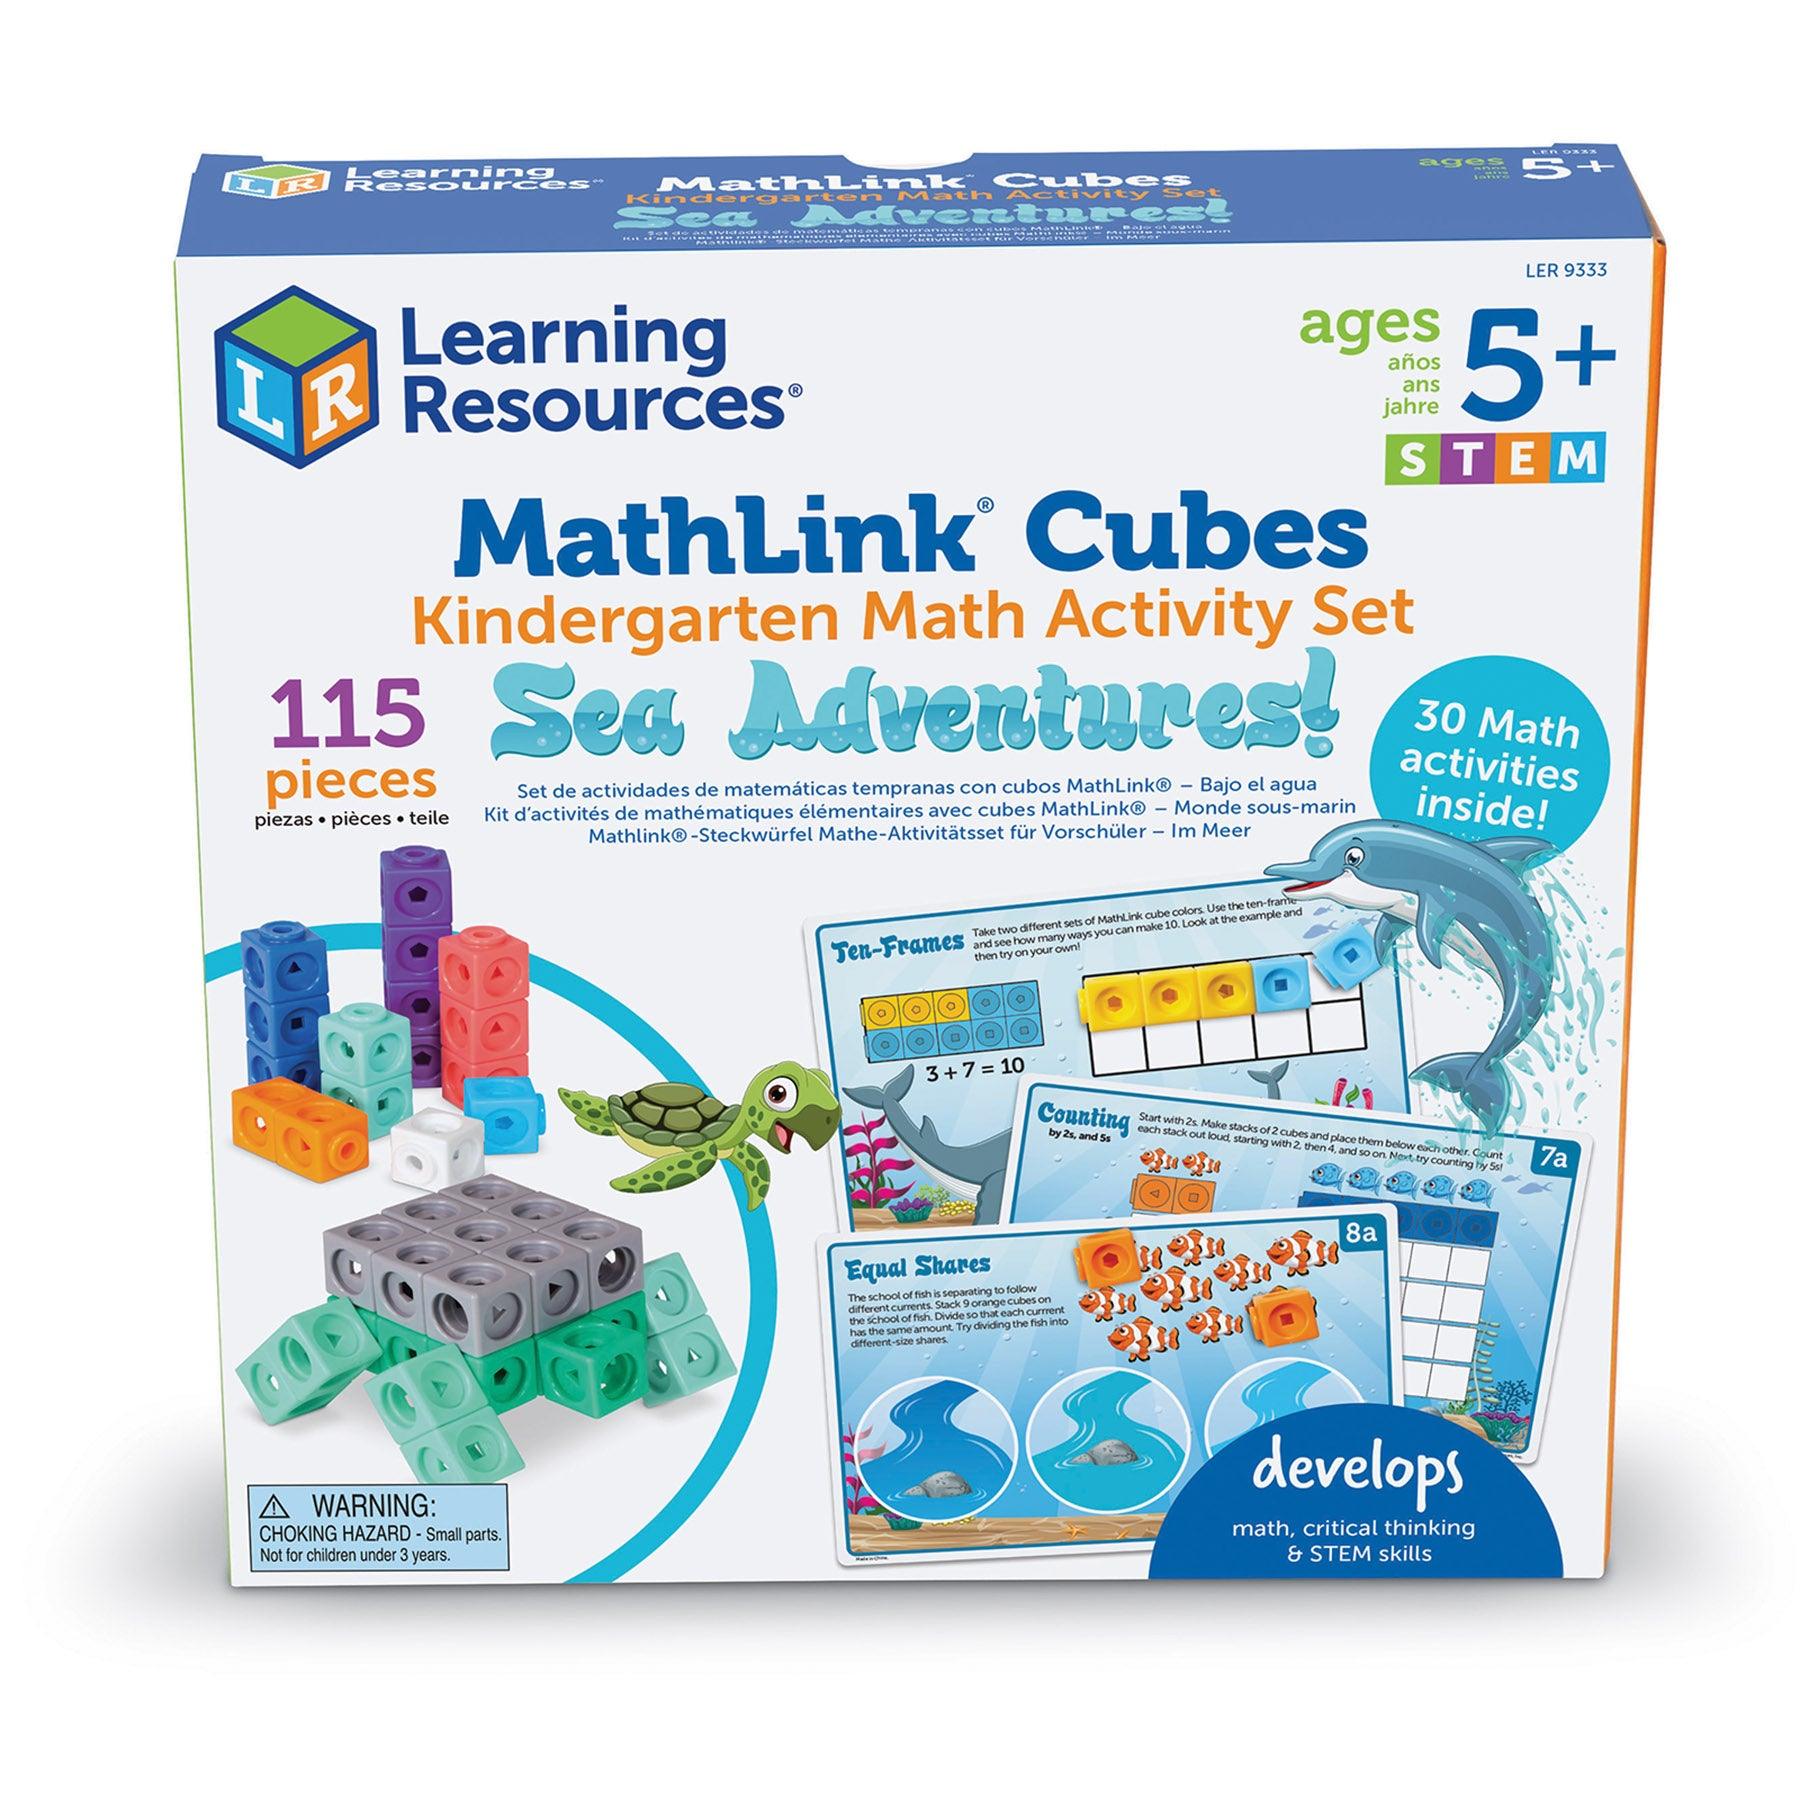 Mathlink® Cubes Kindergarten Math Activity Set: Sea Adventures! - Loomini